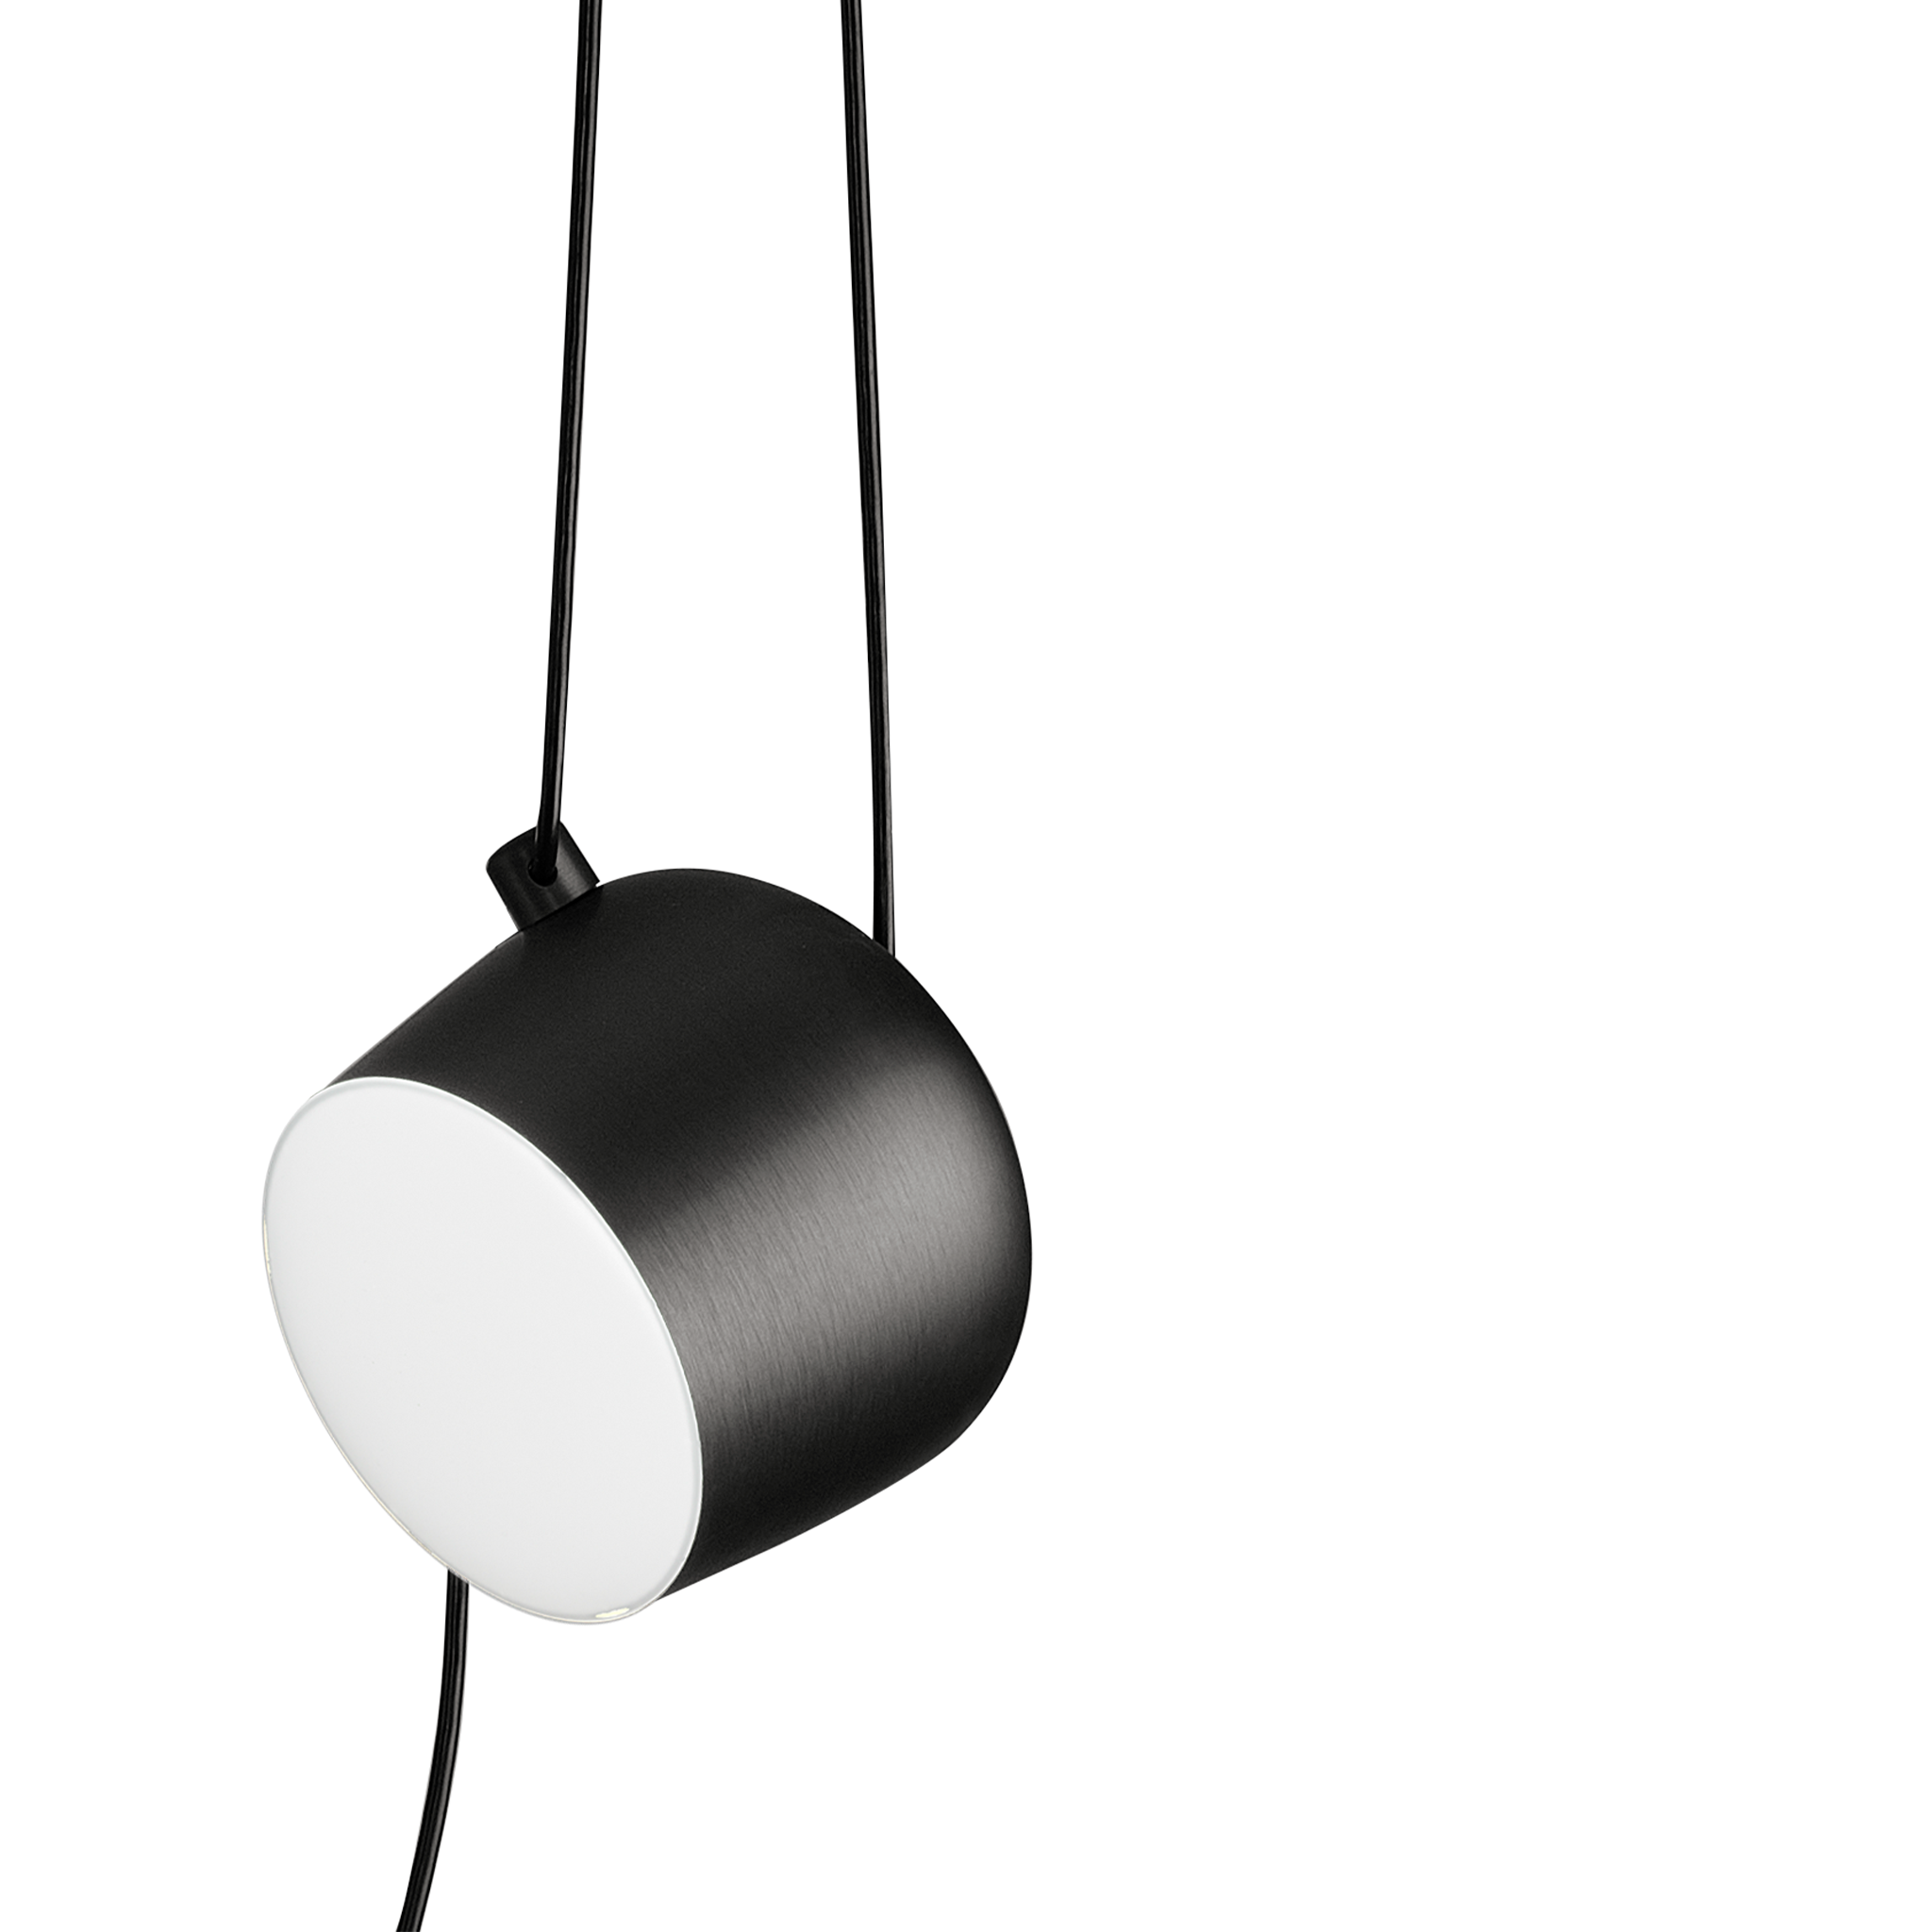 Aim Small Pendant Lamp by Ronan & Erwan Bouroullec for Flos